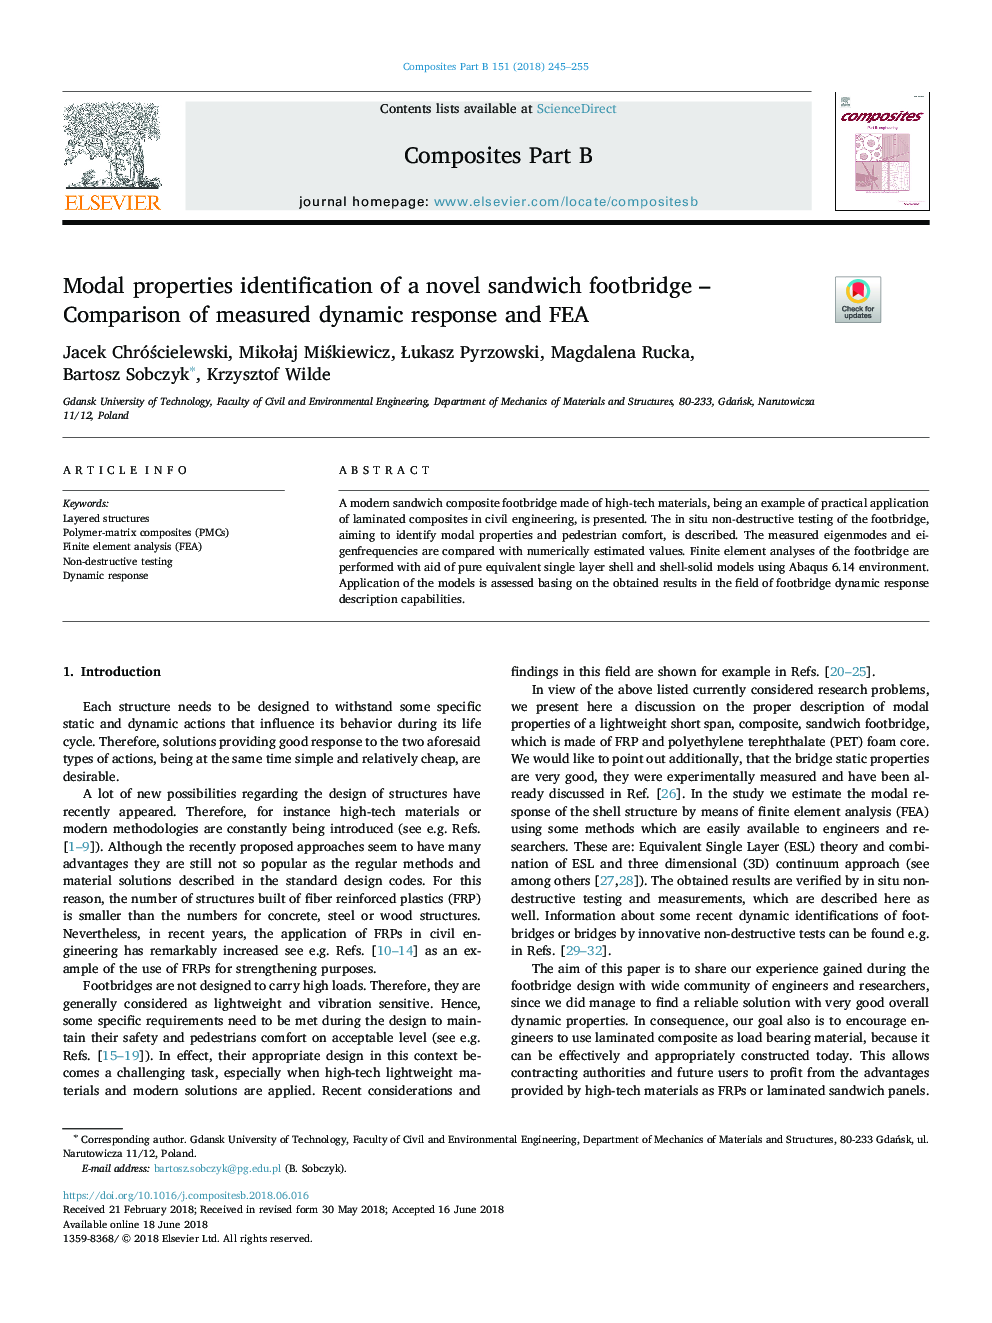 Modal properties identification of a novel sandwich footbridge - Comparison of measured dynamic response and FEA